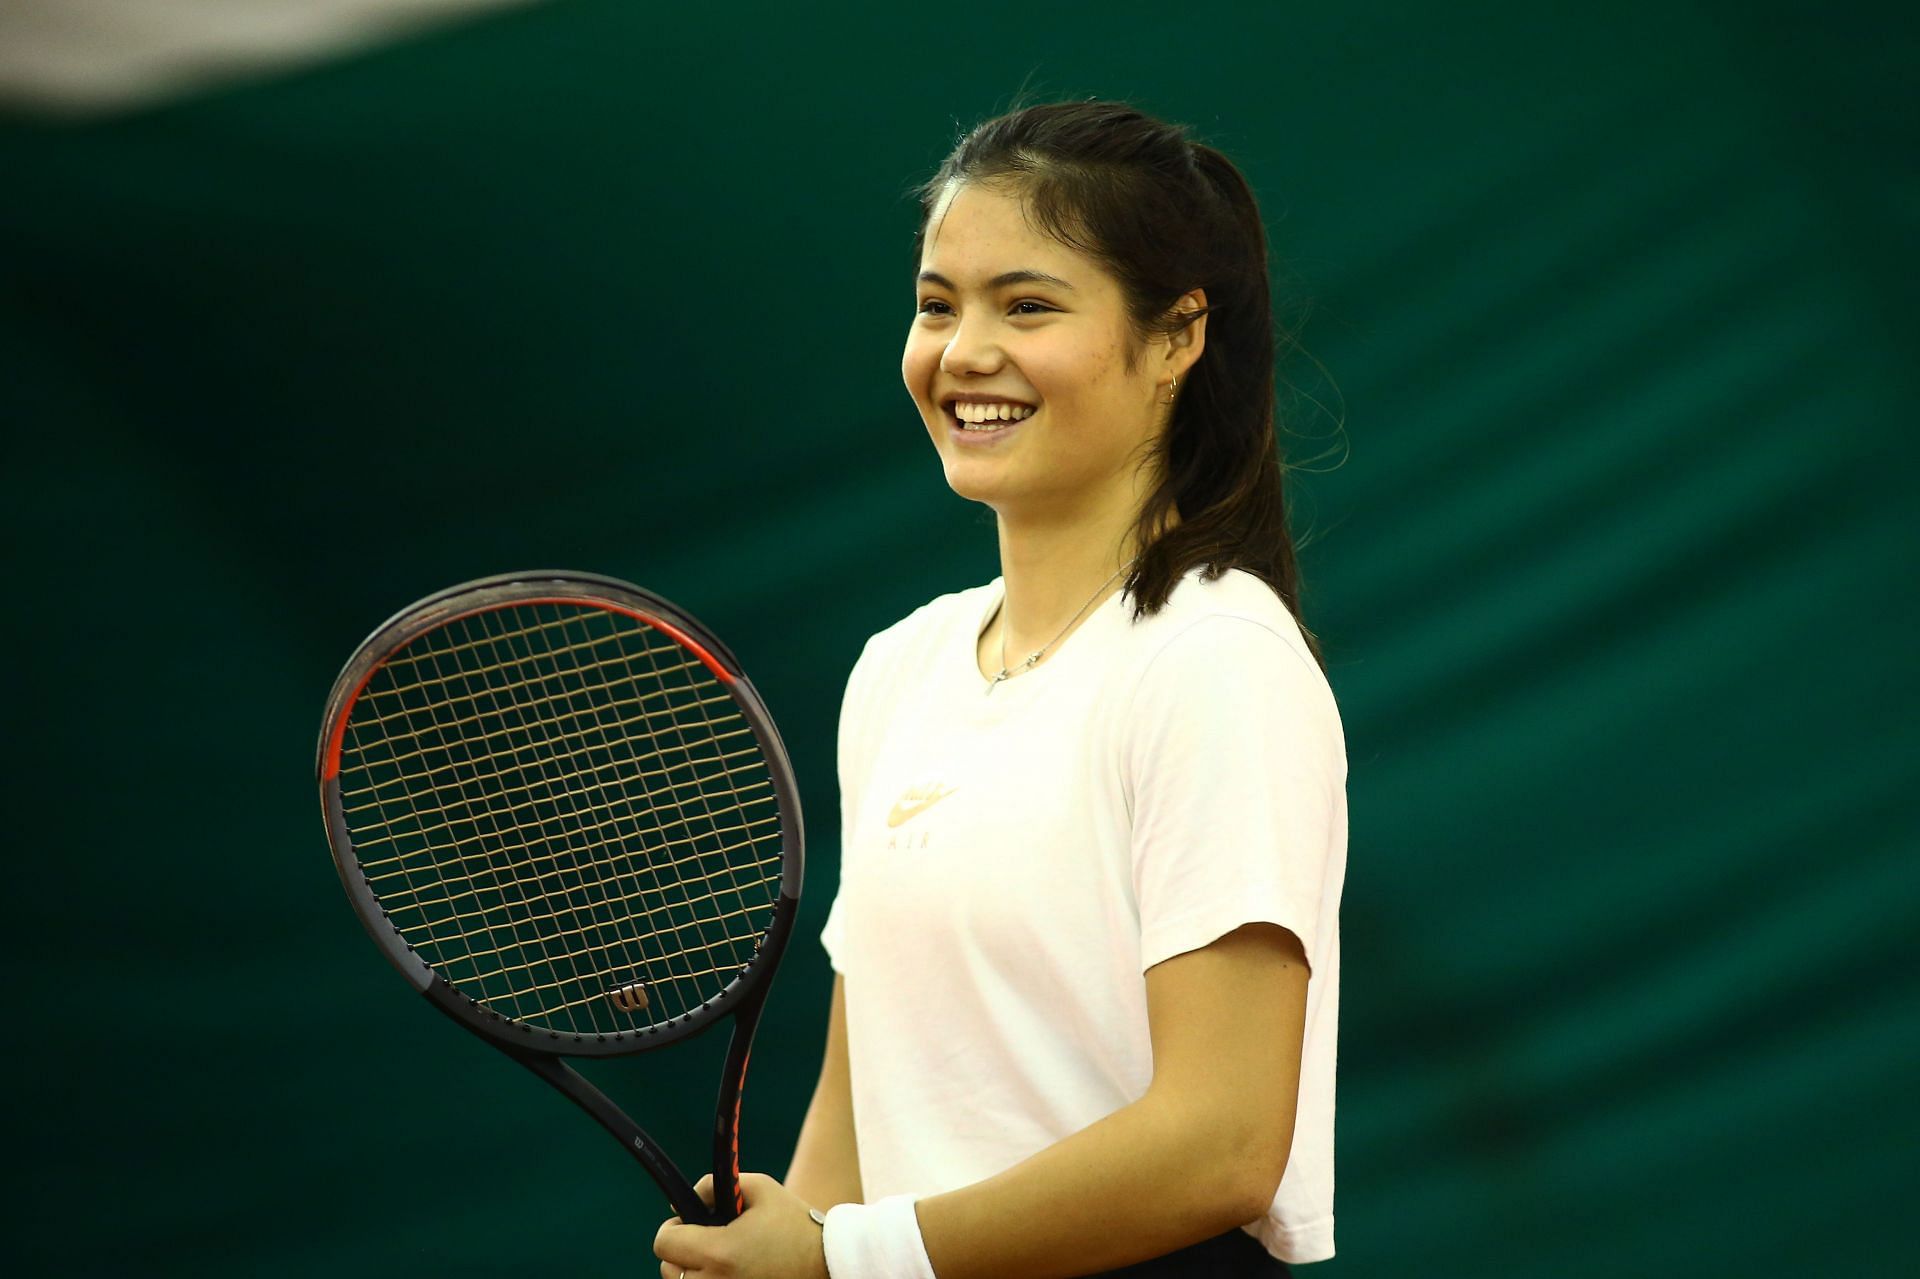 A 17-year-old Emma Raducanu at the 2020 Fed Cup Qualifying